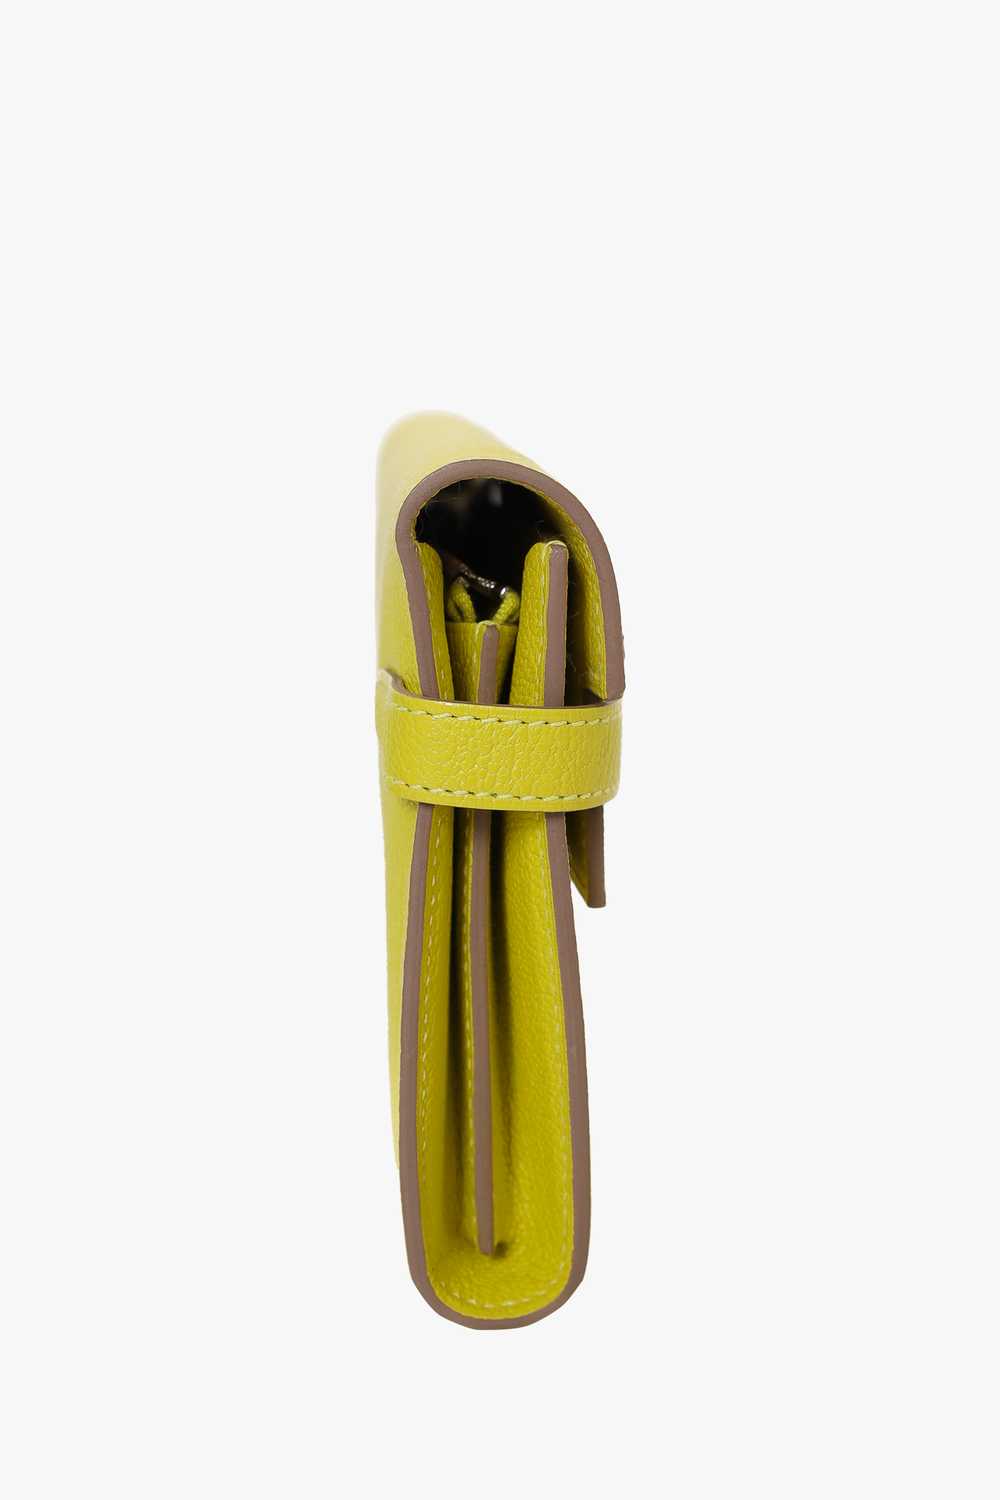 Hermès 2017 Yellow Chevre Leather Kelly Wallet - image 3